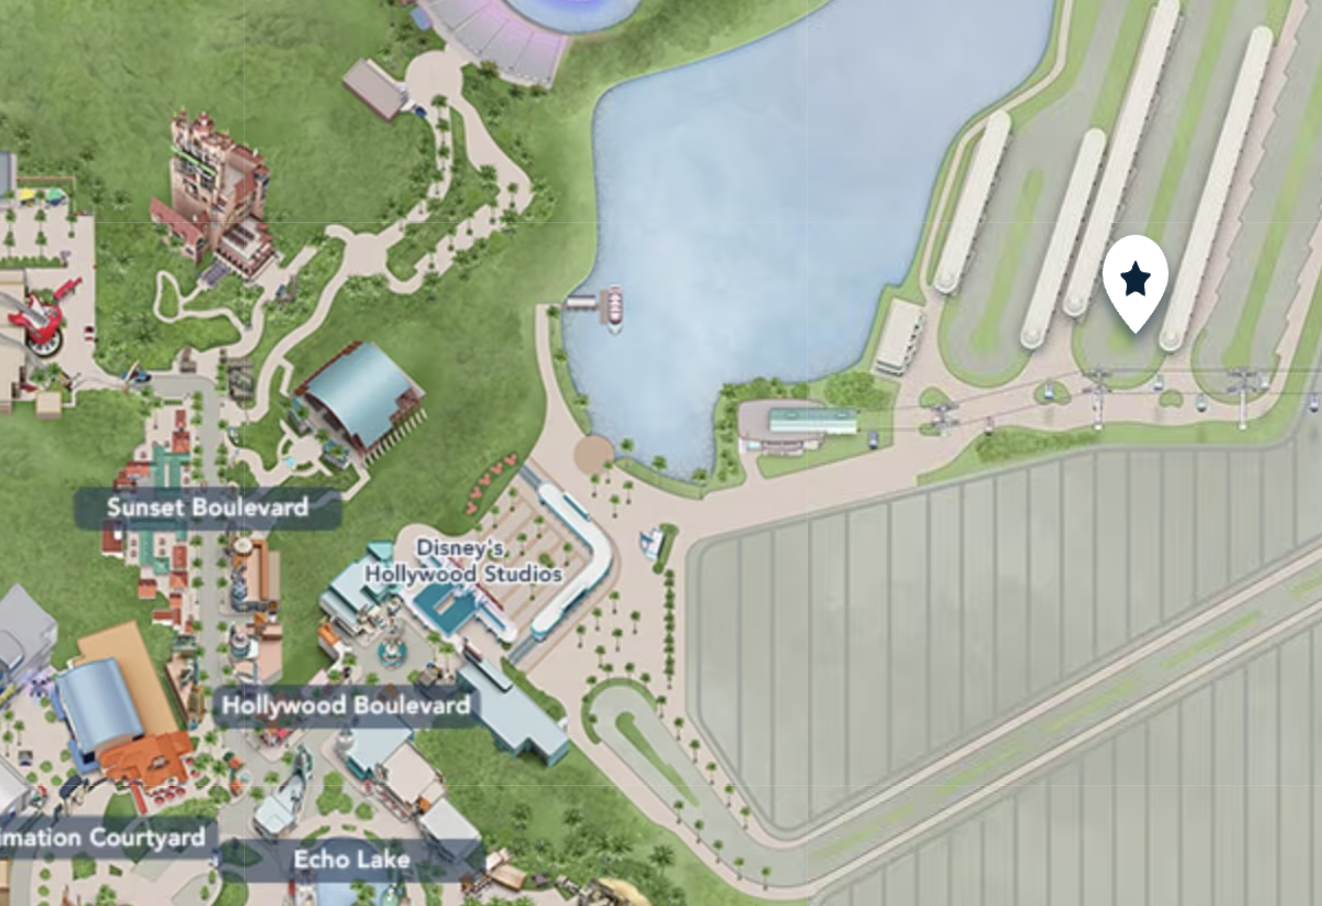 Disney's Hollywood Studios Theme Park Bus Stop Map